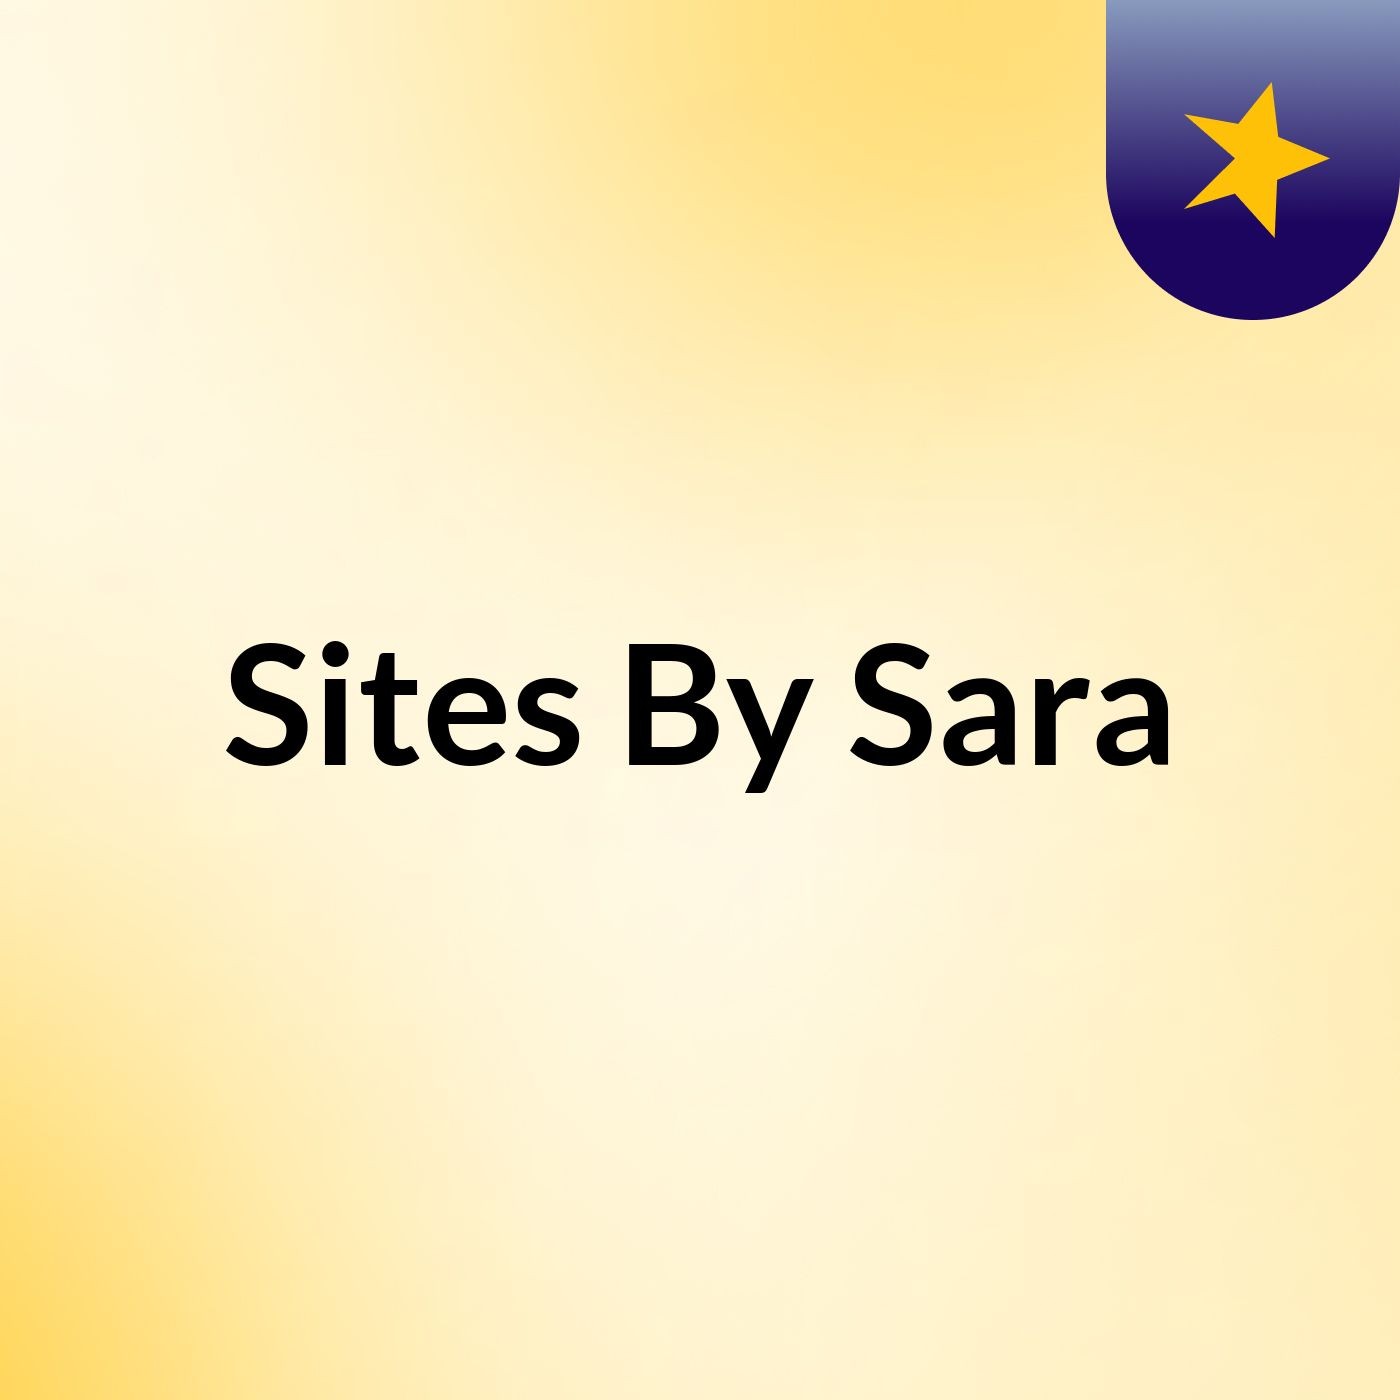 Sites By Sara